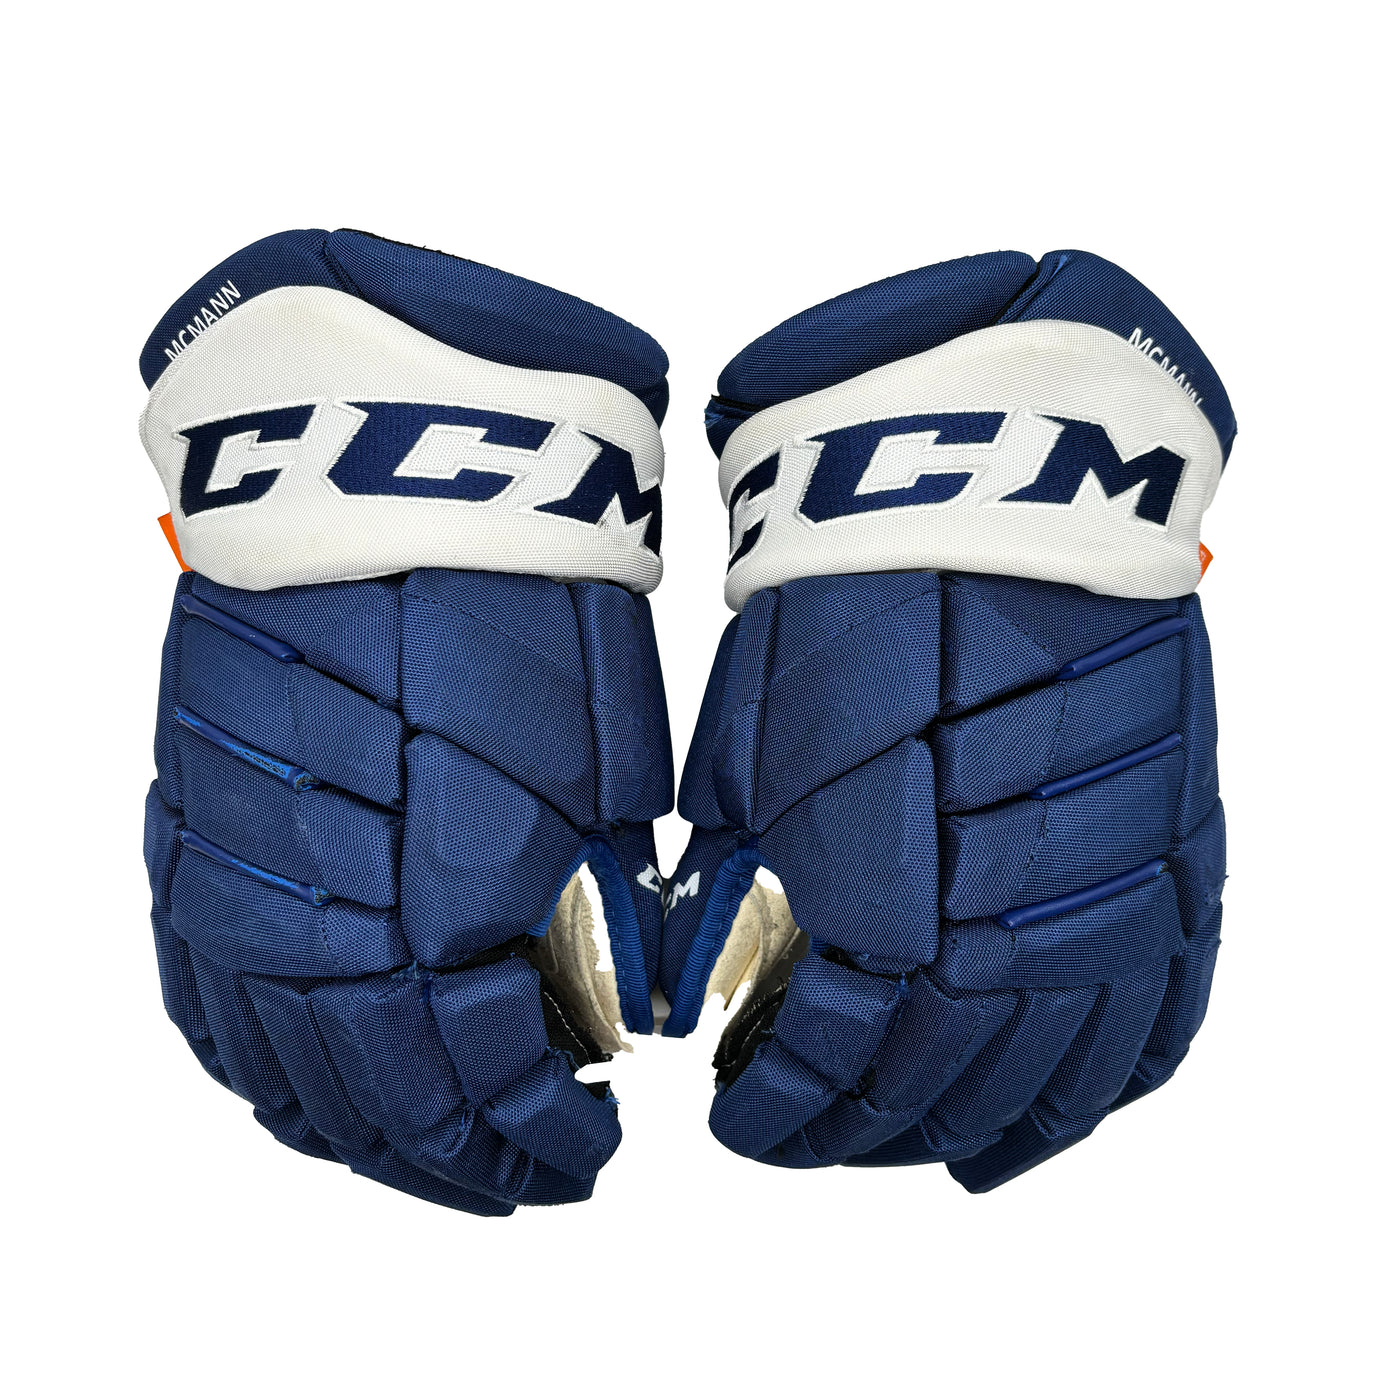 CCM Jetspeed FT1 -  Toronto Maple Leafs - Used Pro Stock Glove - BM